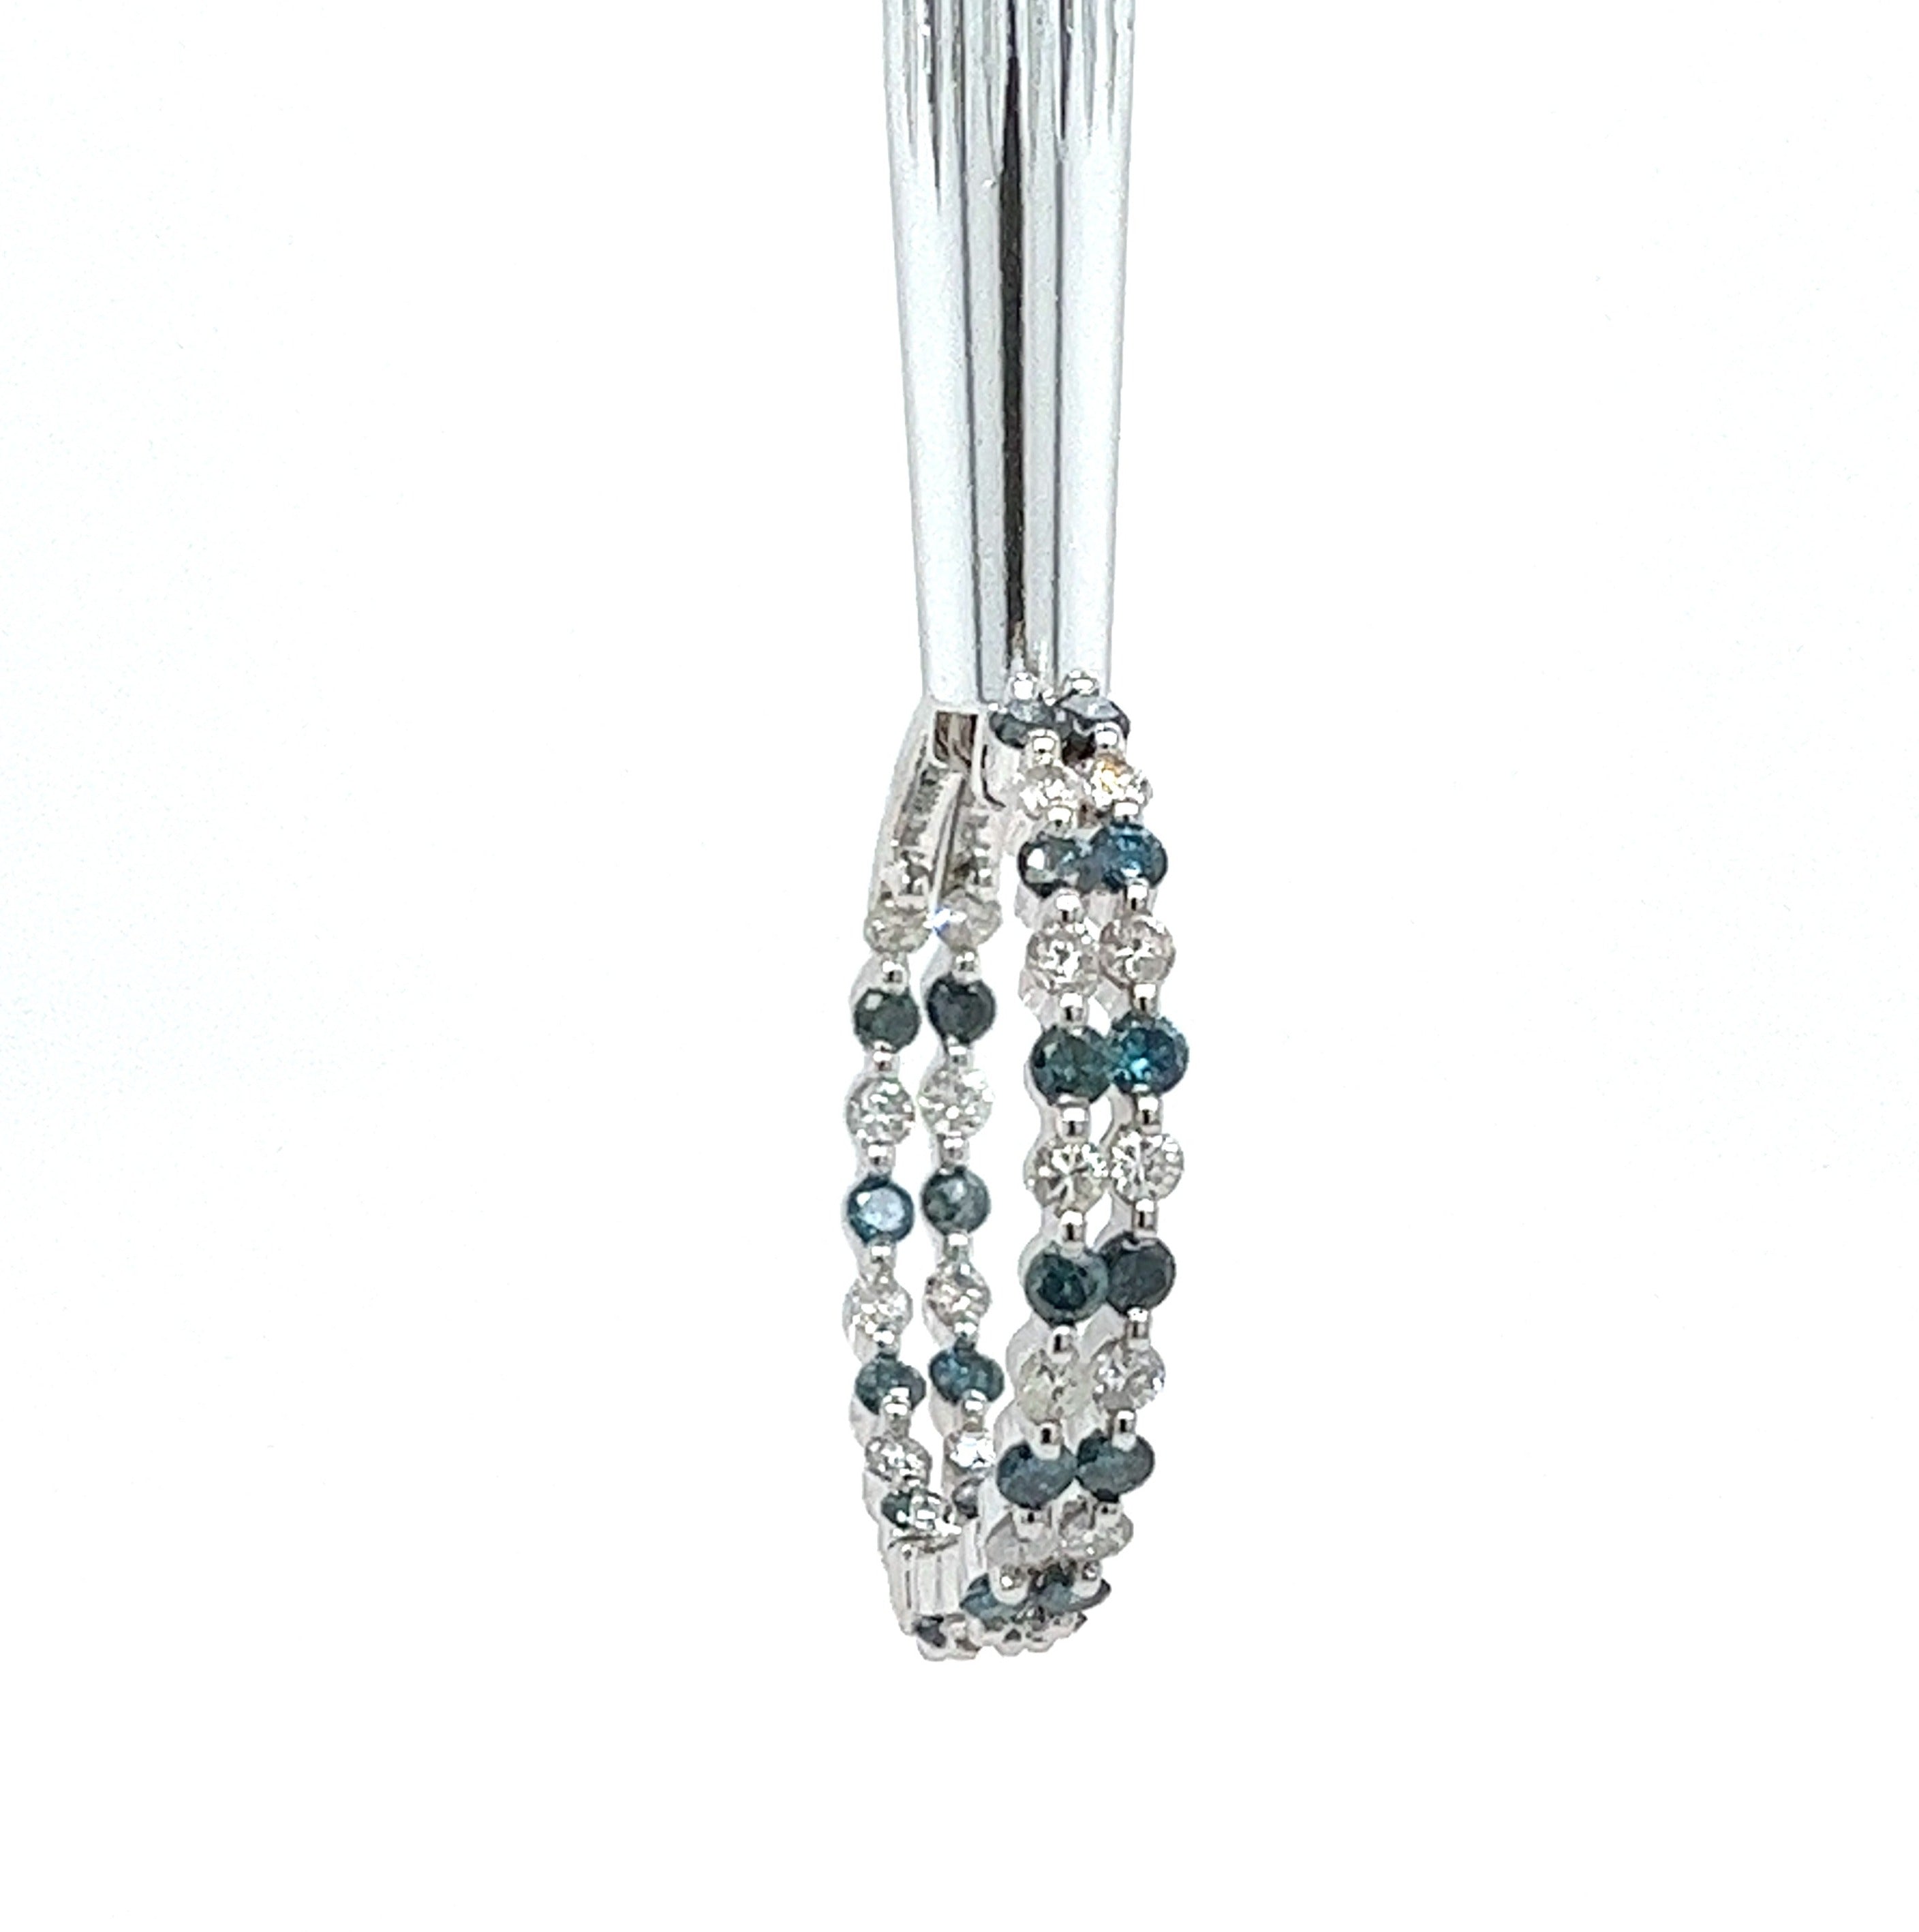 14k White Gold Inside Out Hoop Earrings with White & Blue Diamonds-Earrings-ASSAY